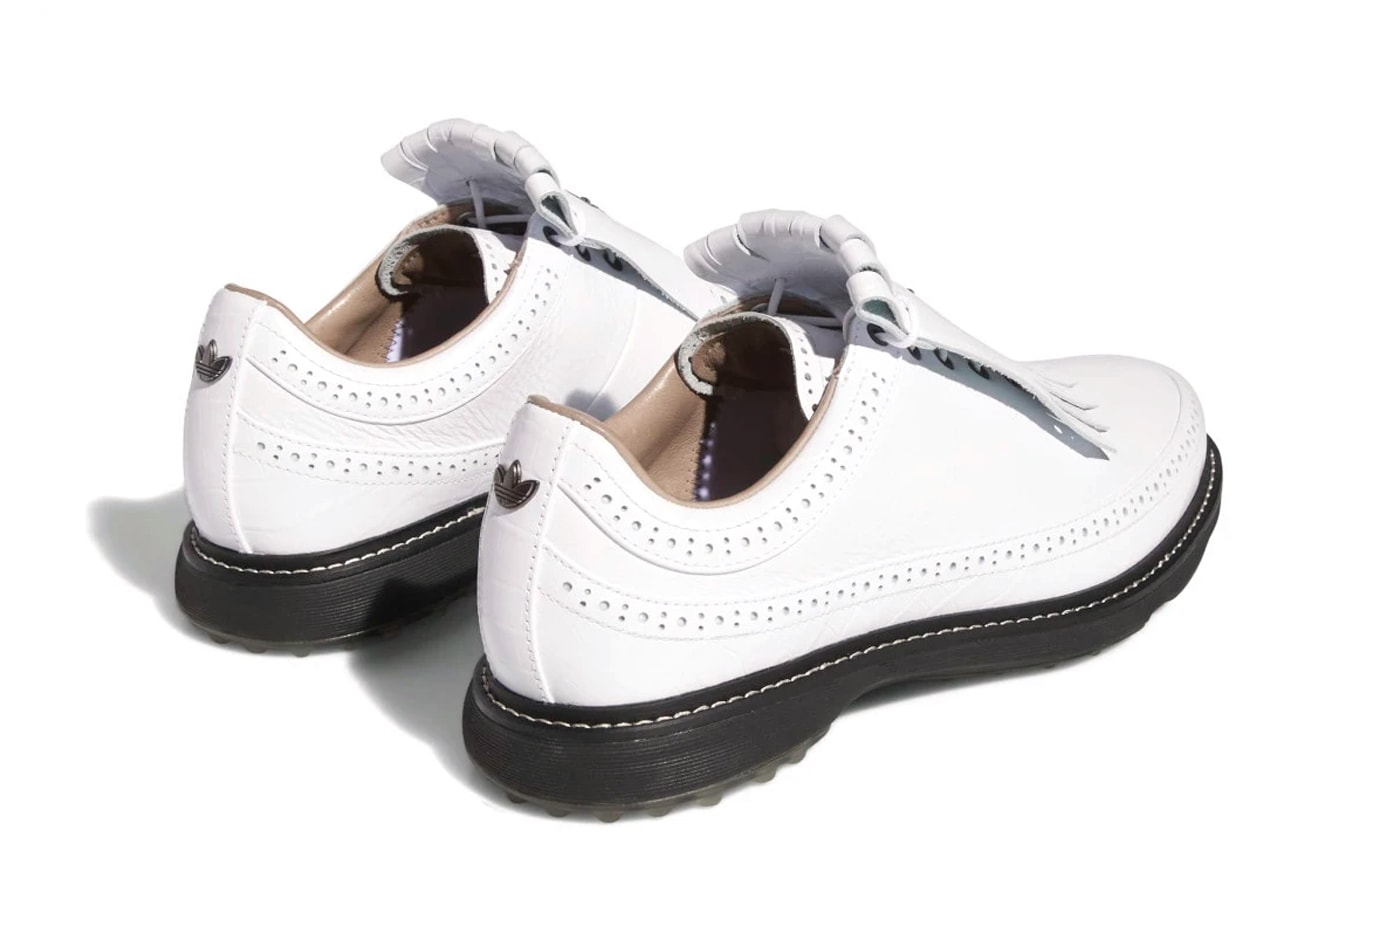 Macklemore Bogey Boys adidas mc80 golf shoe june 14 boost torsion brogue release info date price